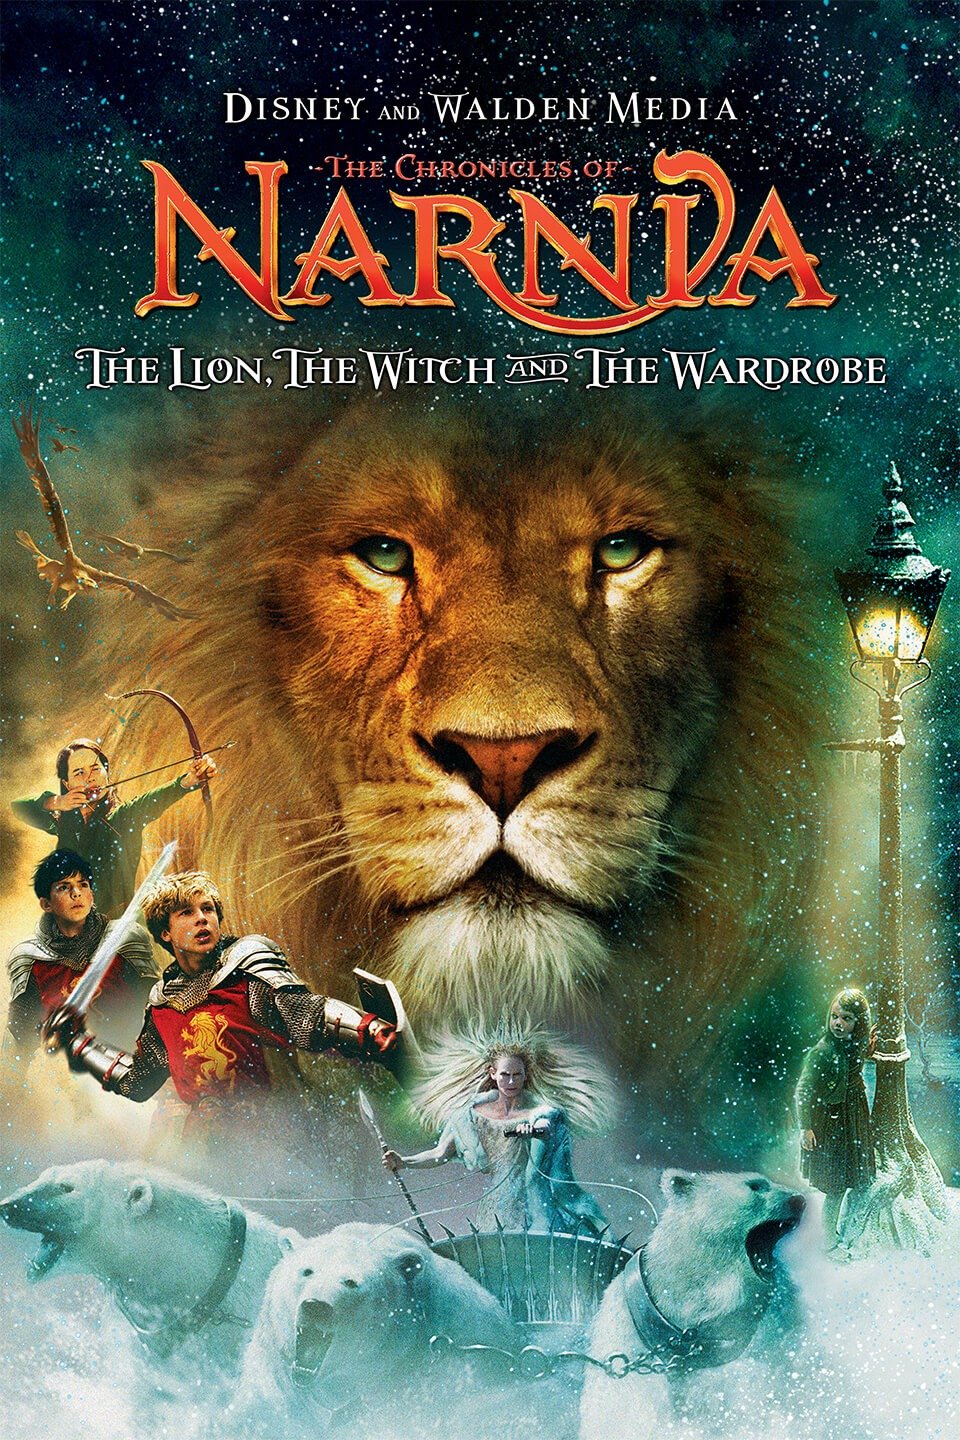 [MINI Super-HQ] The Chronicles of Narnia: The Lion, the Witch and the Wardrobe (2005) อภินิหารตำนานแห่งนาร์เนีย ภาค 1 [1080p] [พากย์ไทย 5.1 + อังกฤษ 5.1] [บรรยายไทย + อังกฤษ] [เสียงไทย + ซับไทย] [OPENLOAD]